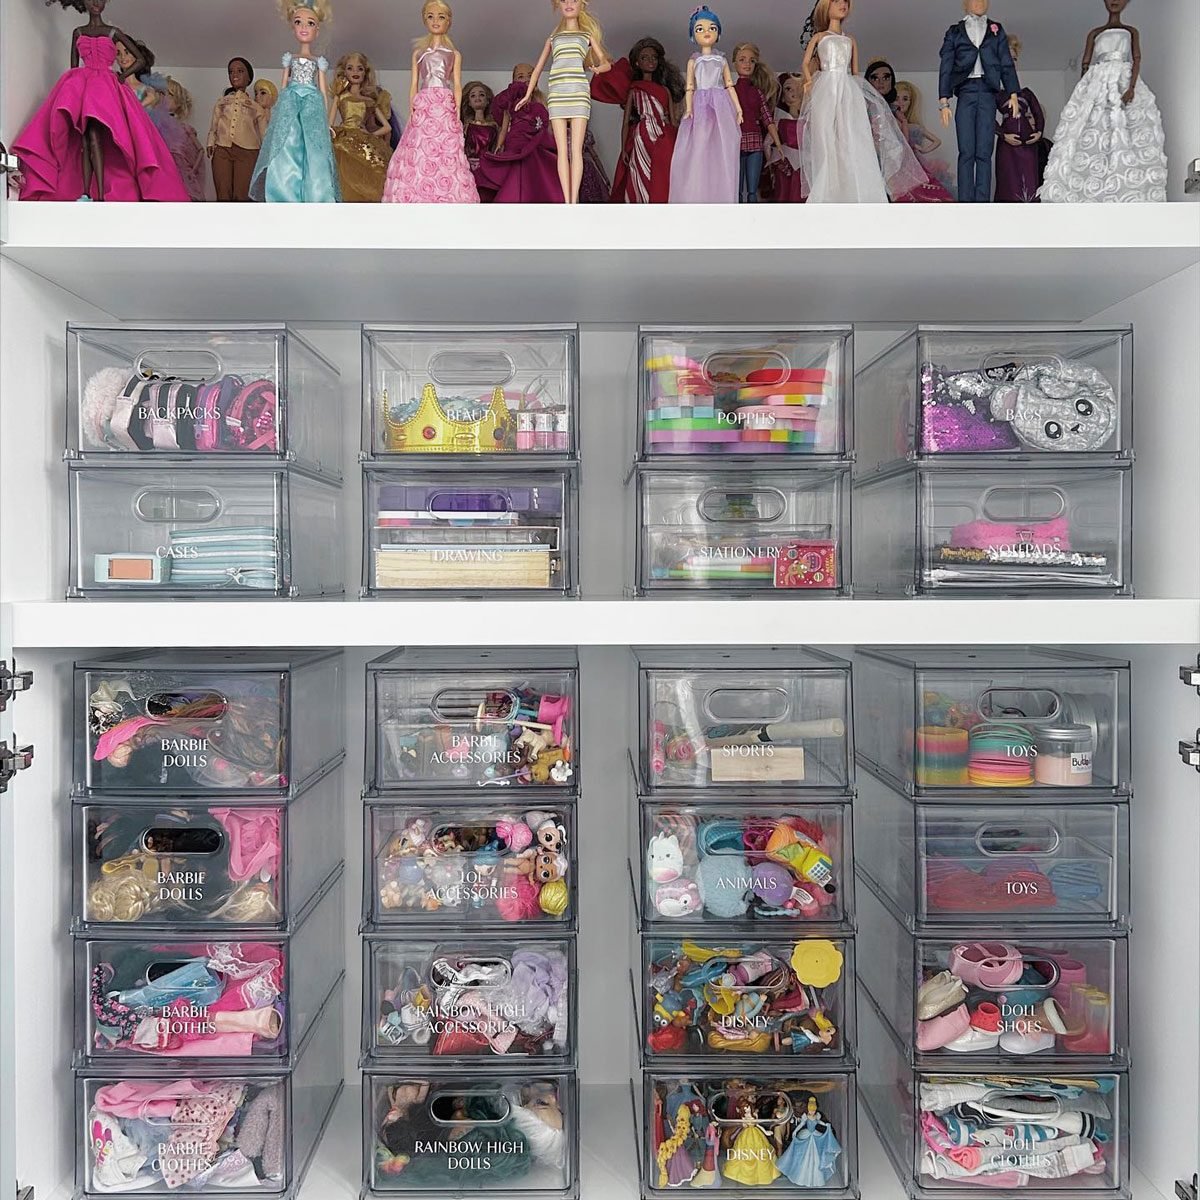 A Genius $10 DIY Barbie Storage Solution